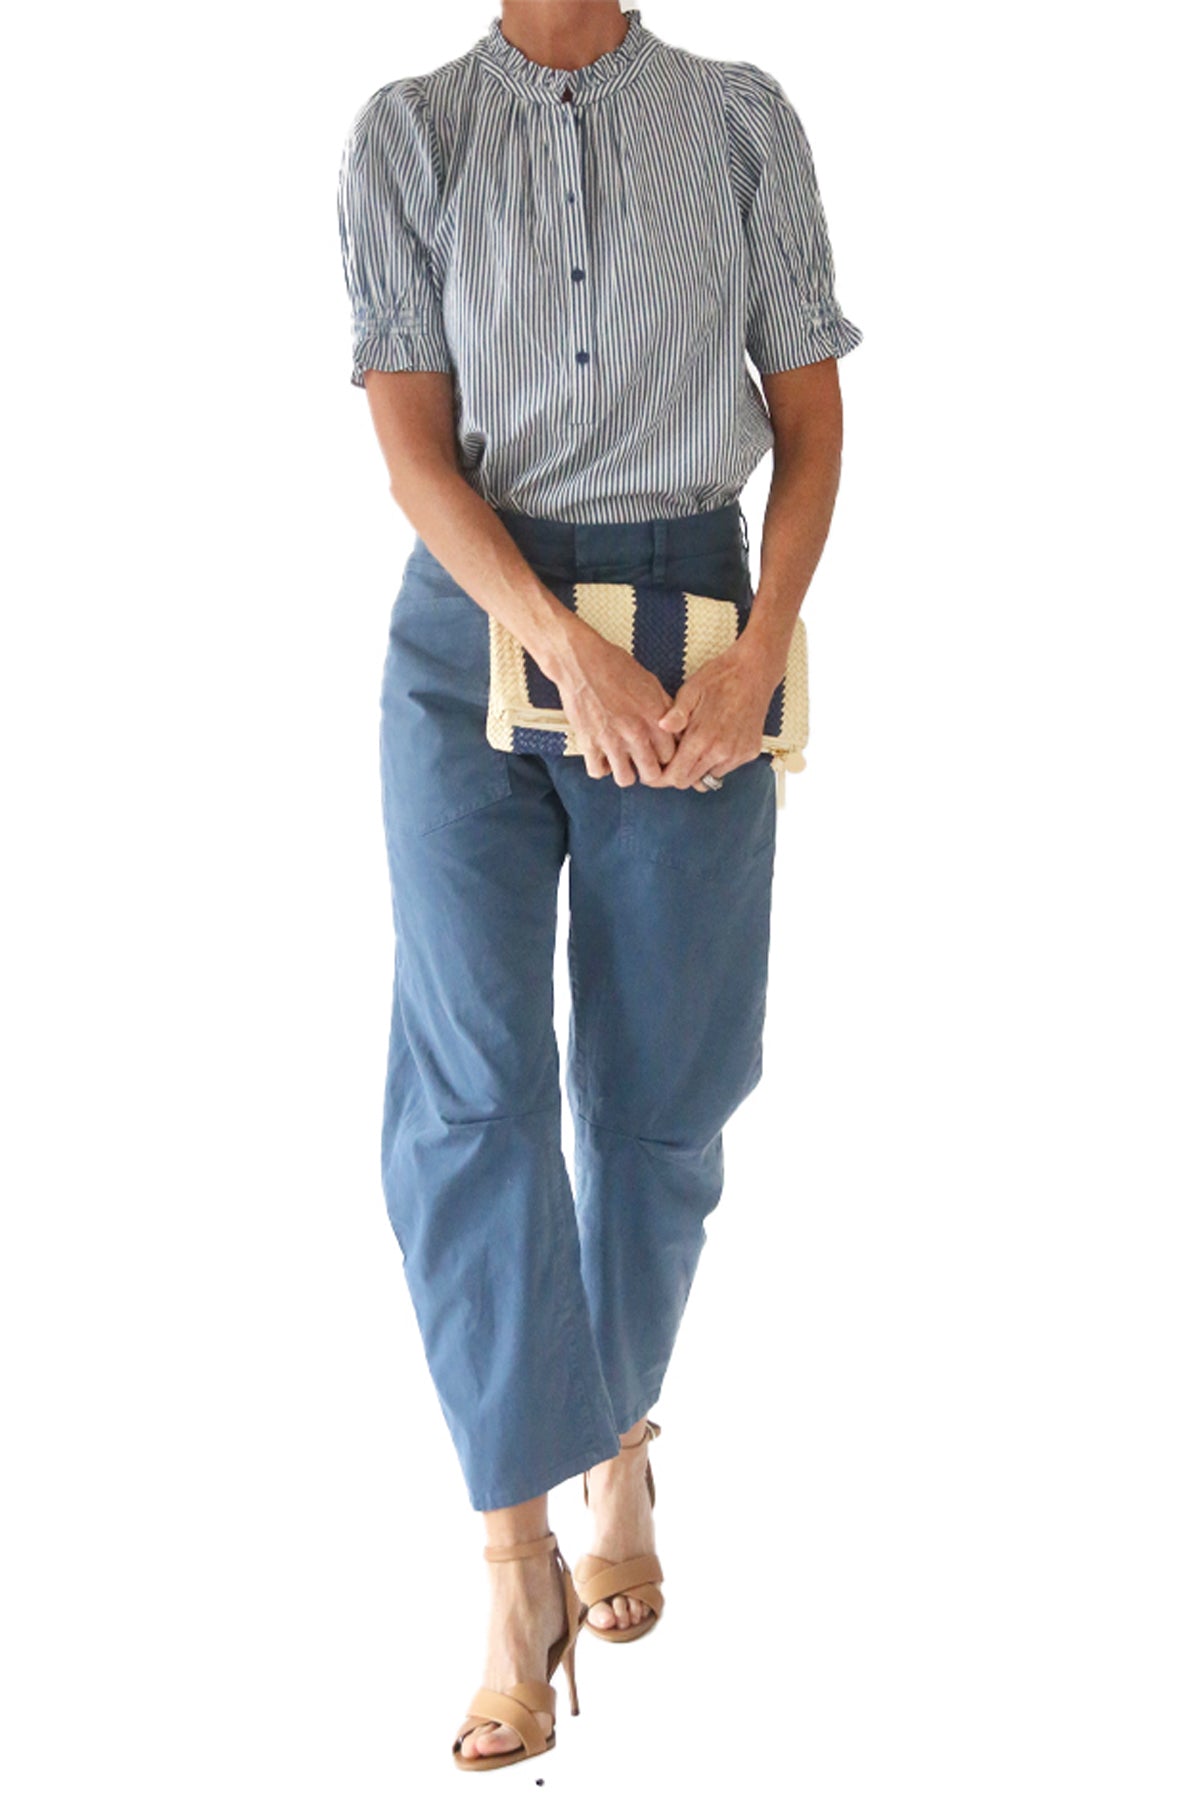 shon pants - cadet blue